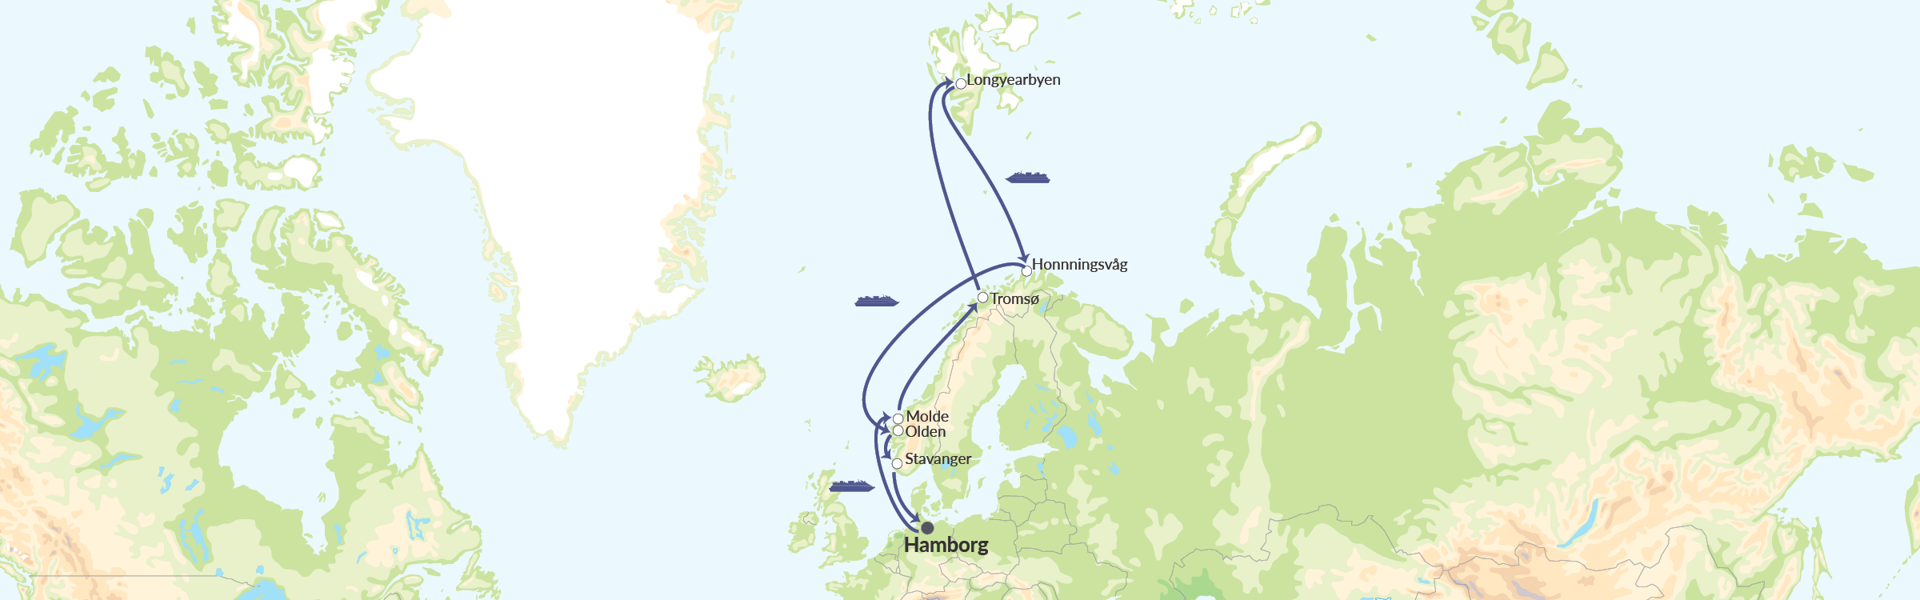 101182 Krydstogt Til Svalbard Og Nordkap Med MSC Preziosa